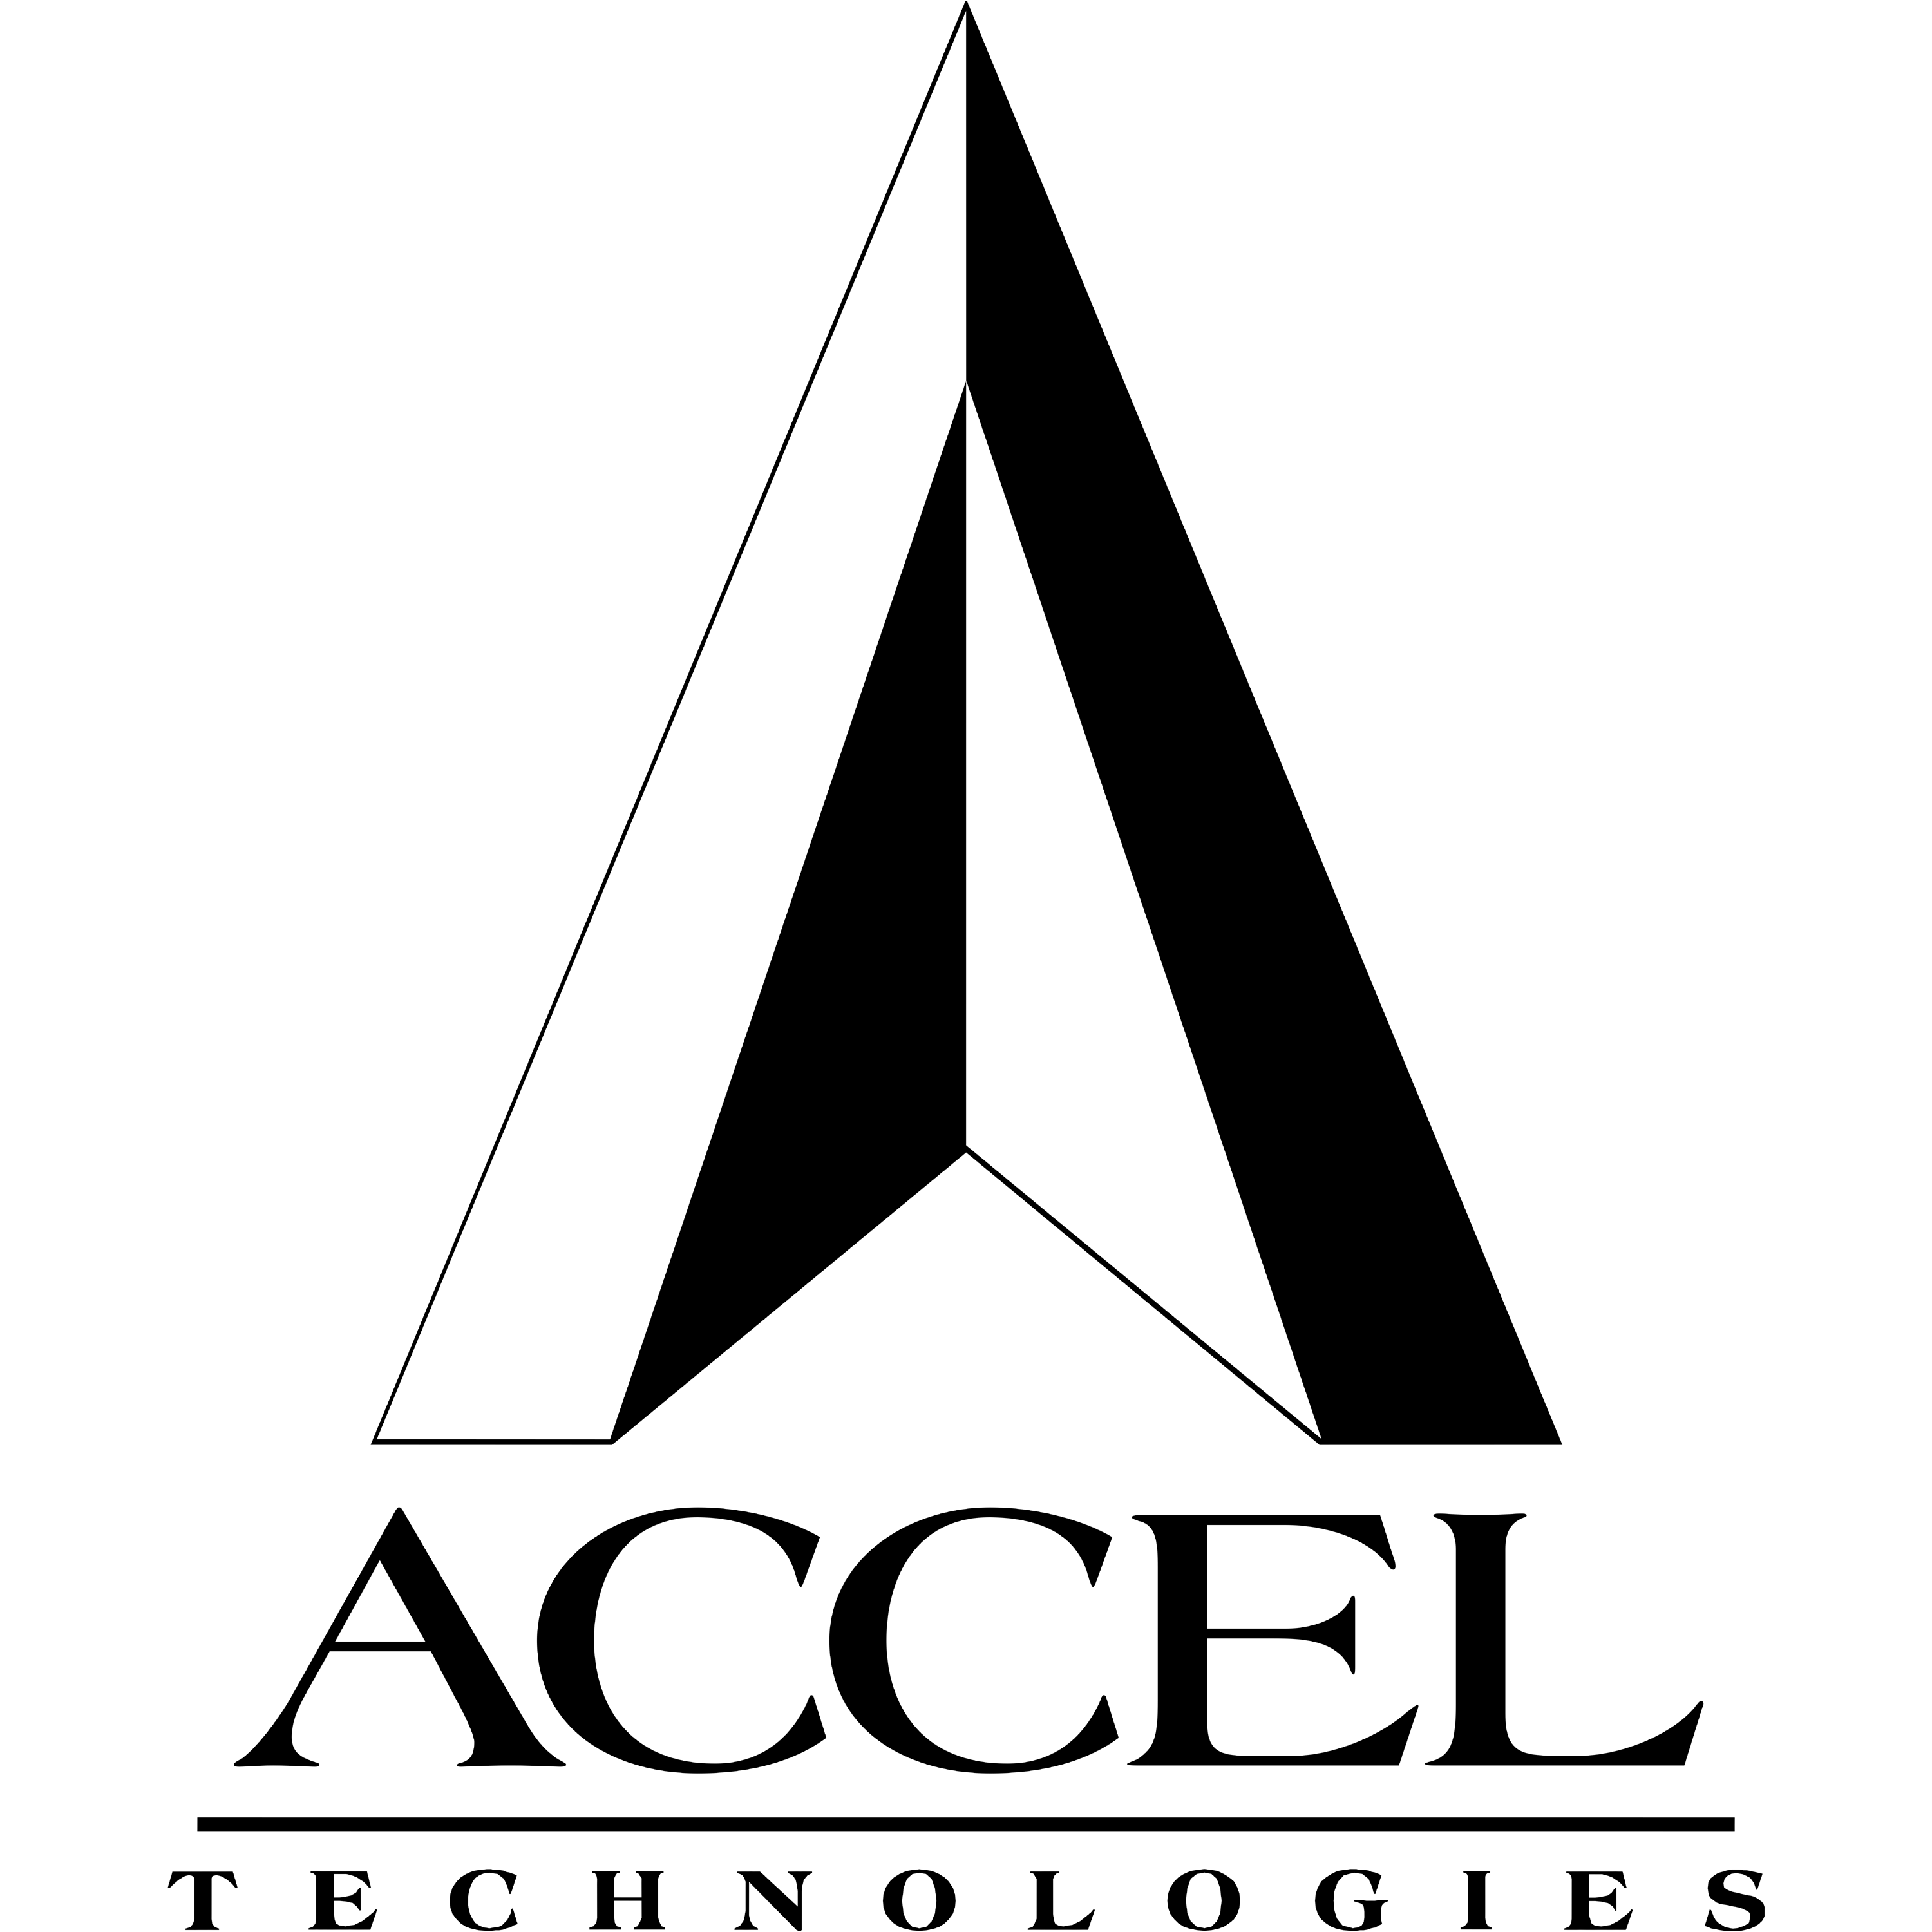 Accel Technologies Logo Transparent Image